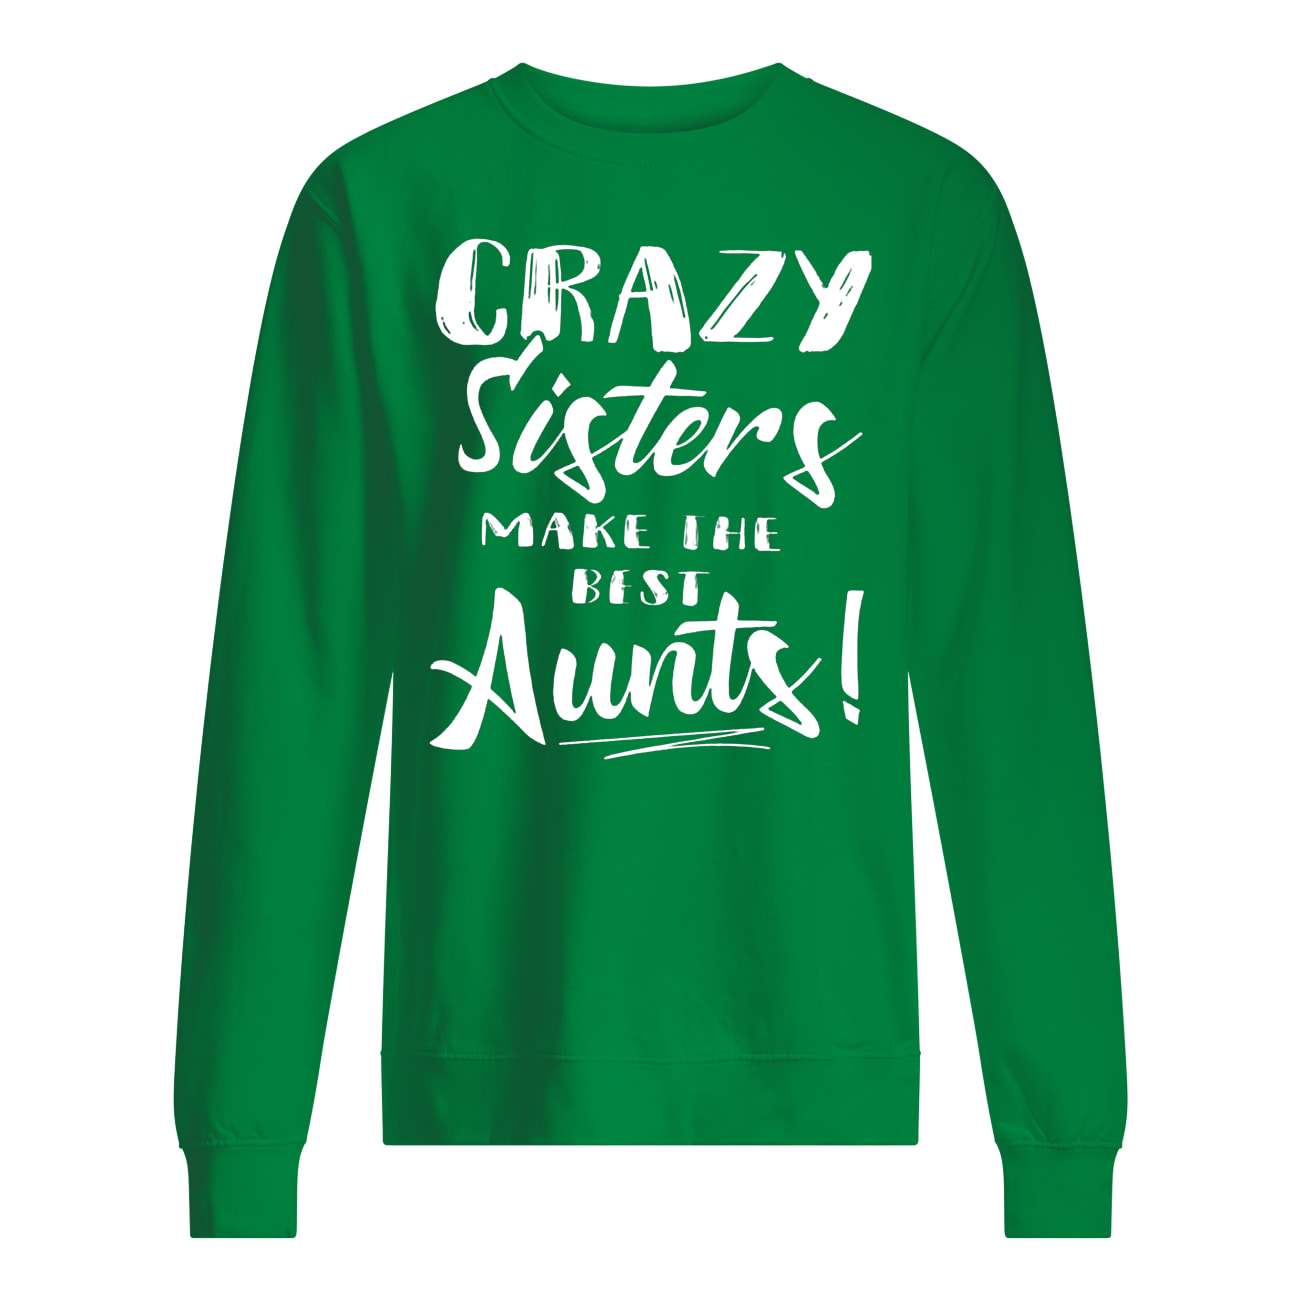 Crazy sisters make the best aunts sweatshirt